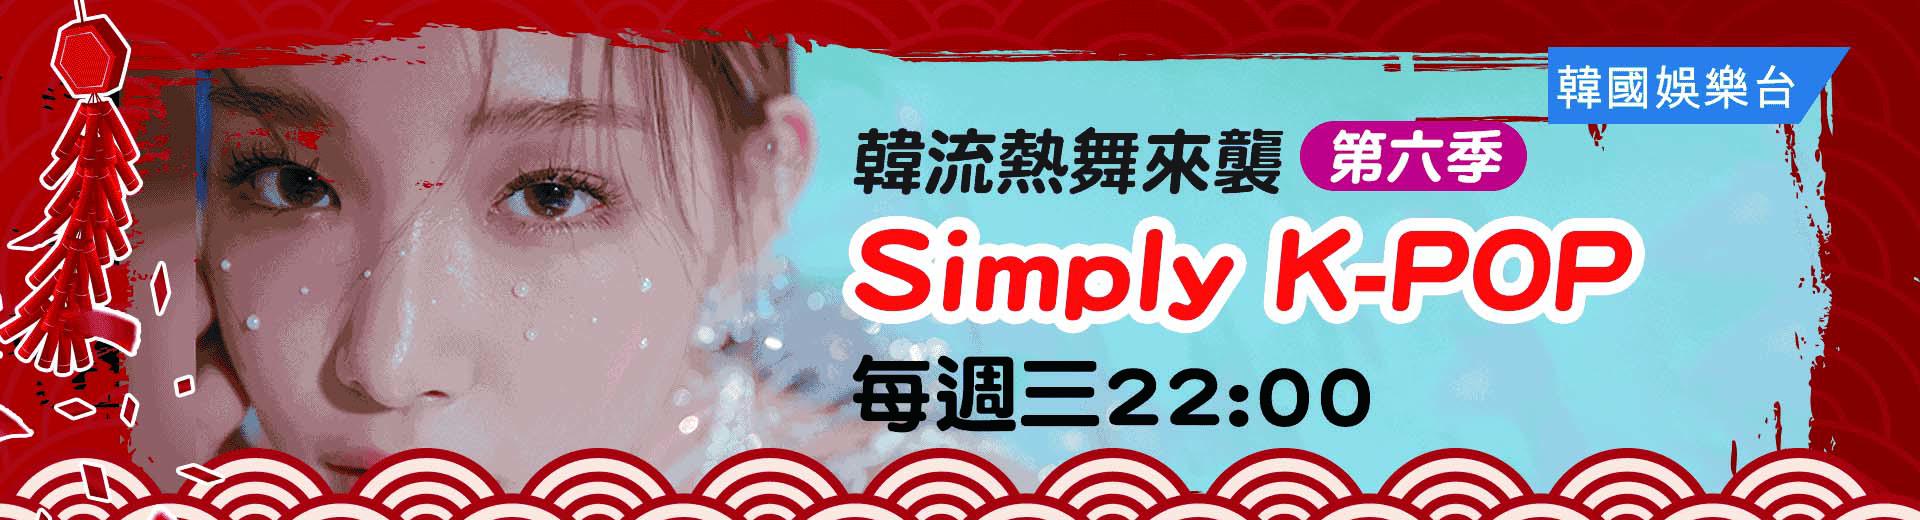 《Simply K-POP 第六季》/ Simply K-POP (Season 6) 